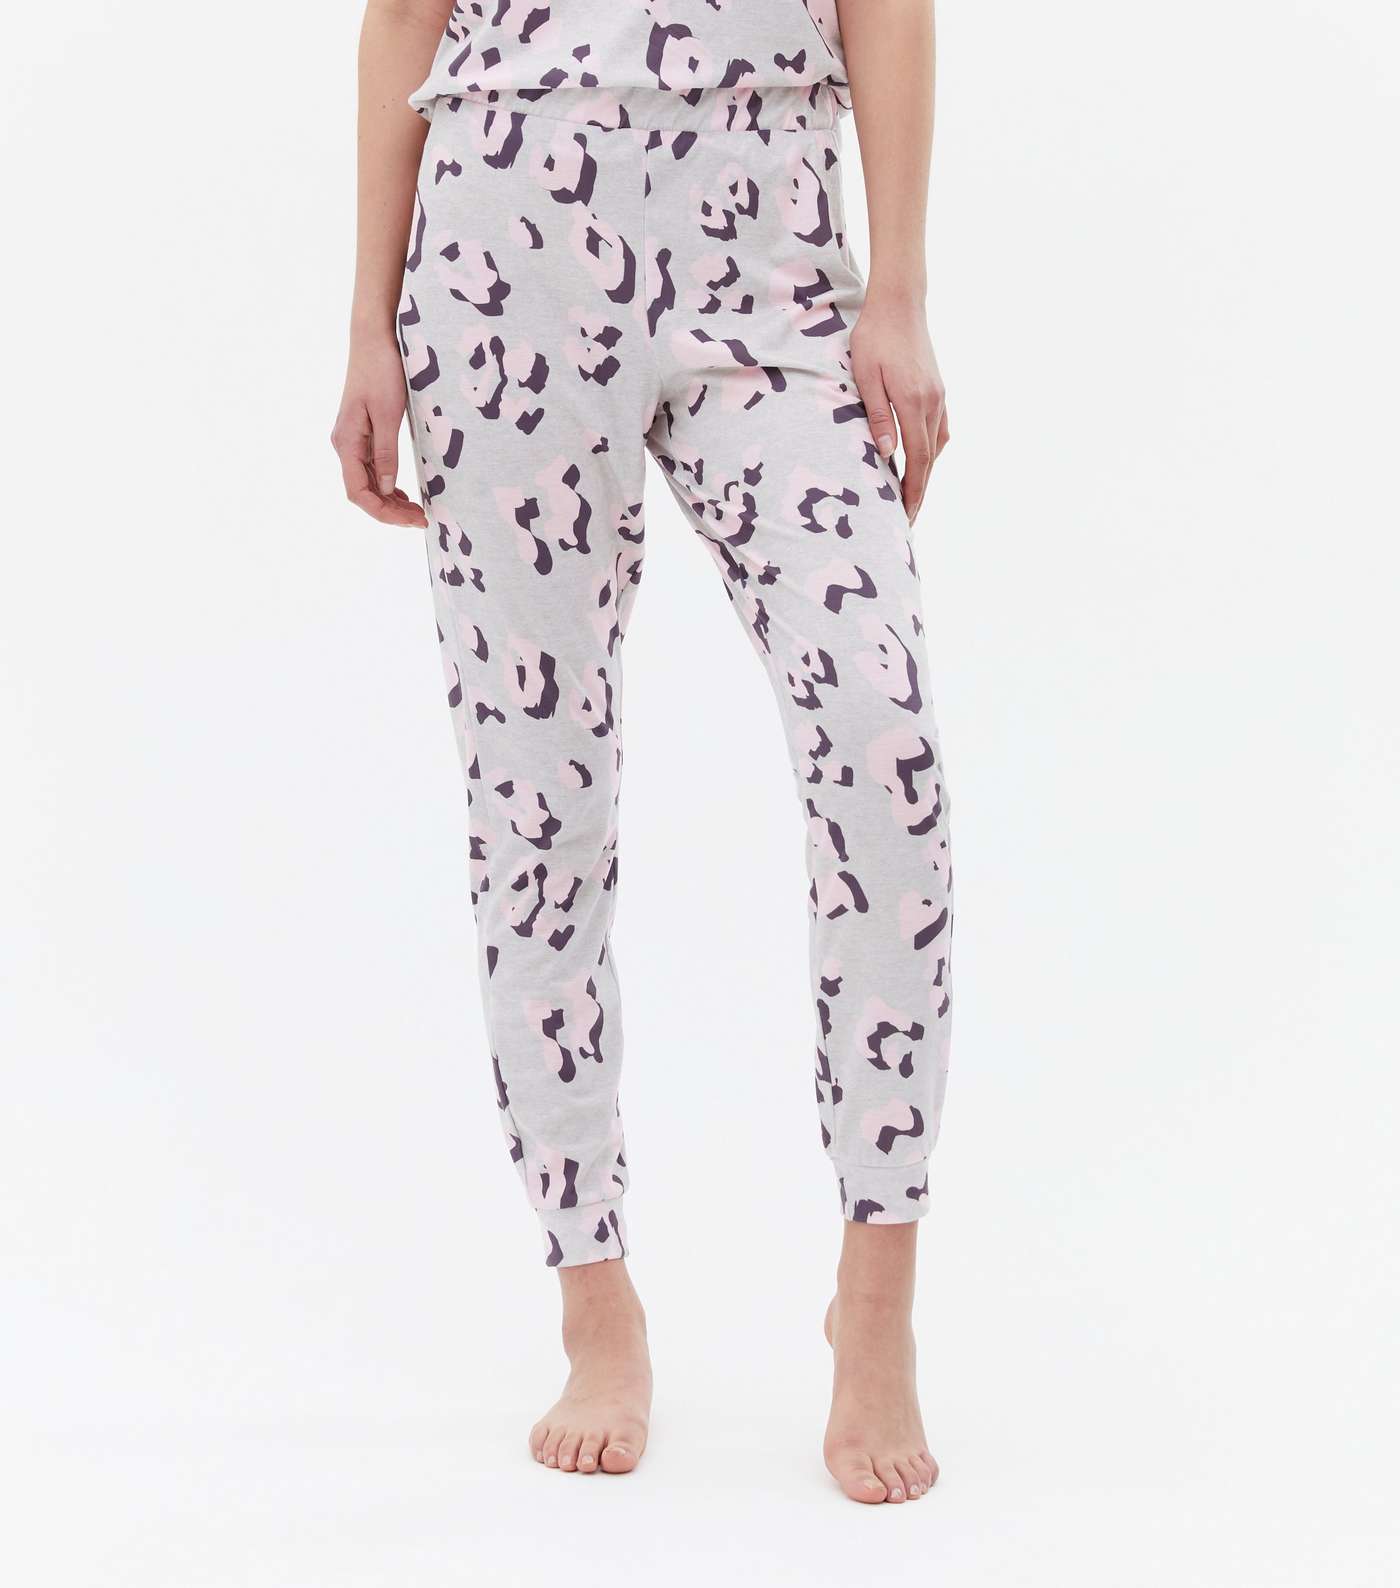 Light Grey Soft Touch Legging Pyjama Set with Animal Print Image 3